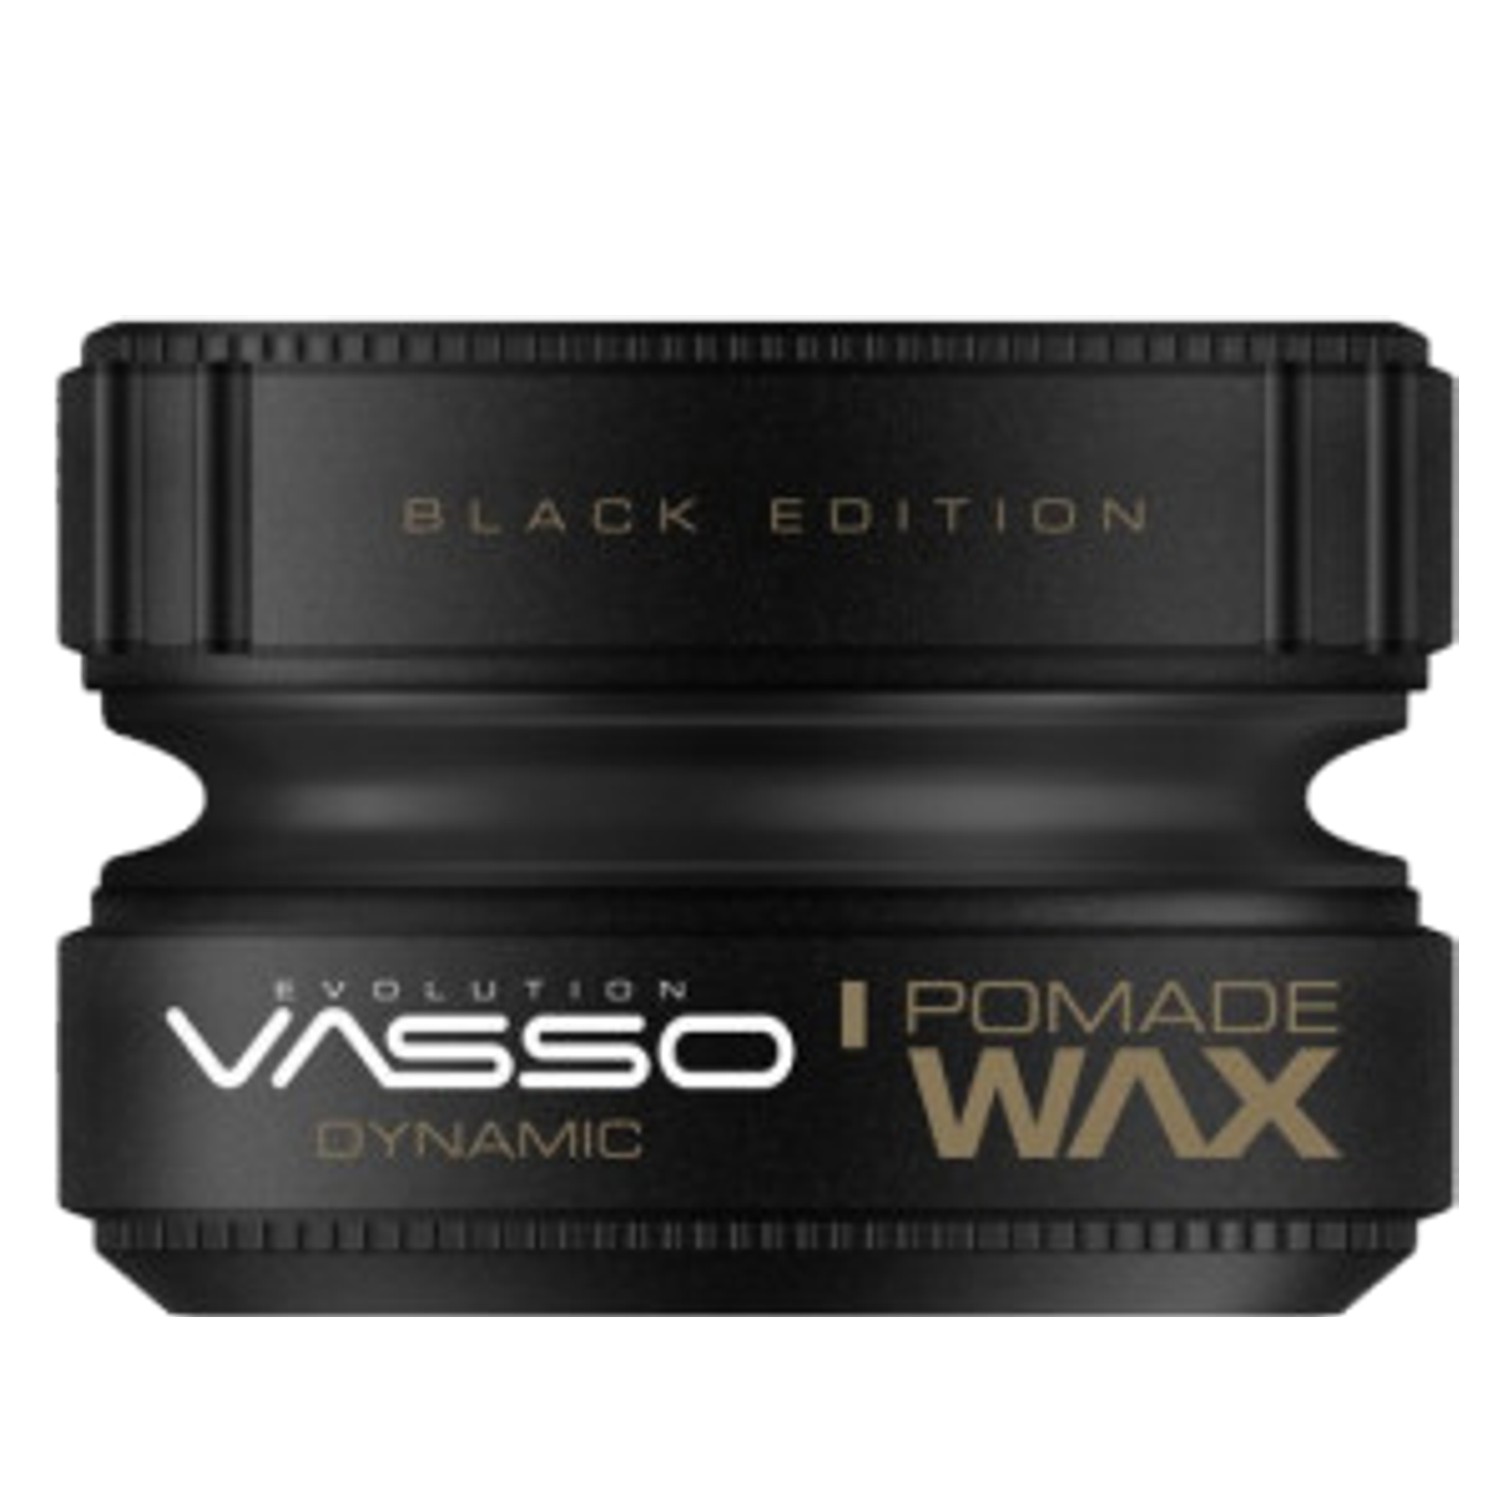 VASSO BLACK EDITION Pomade Wax ¨DYNAMIC¨ 150 ml